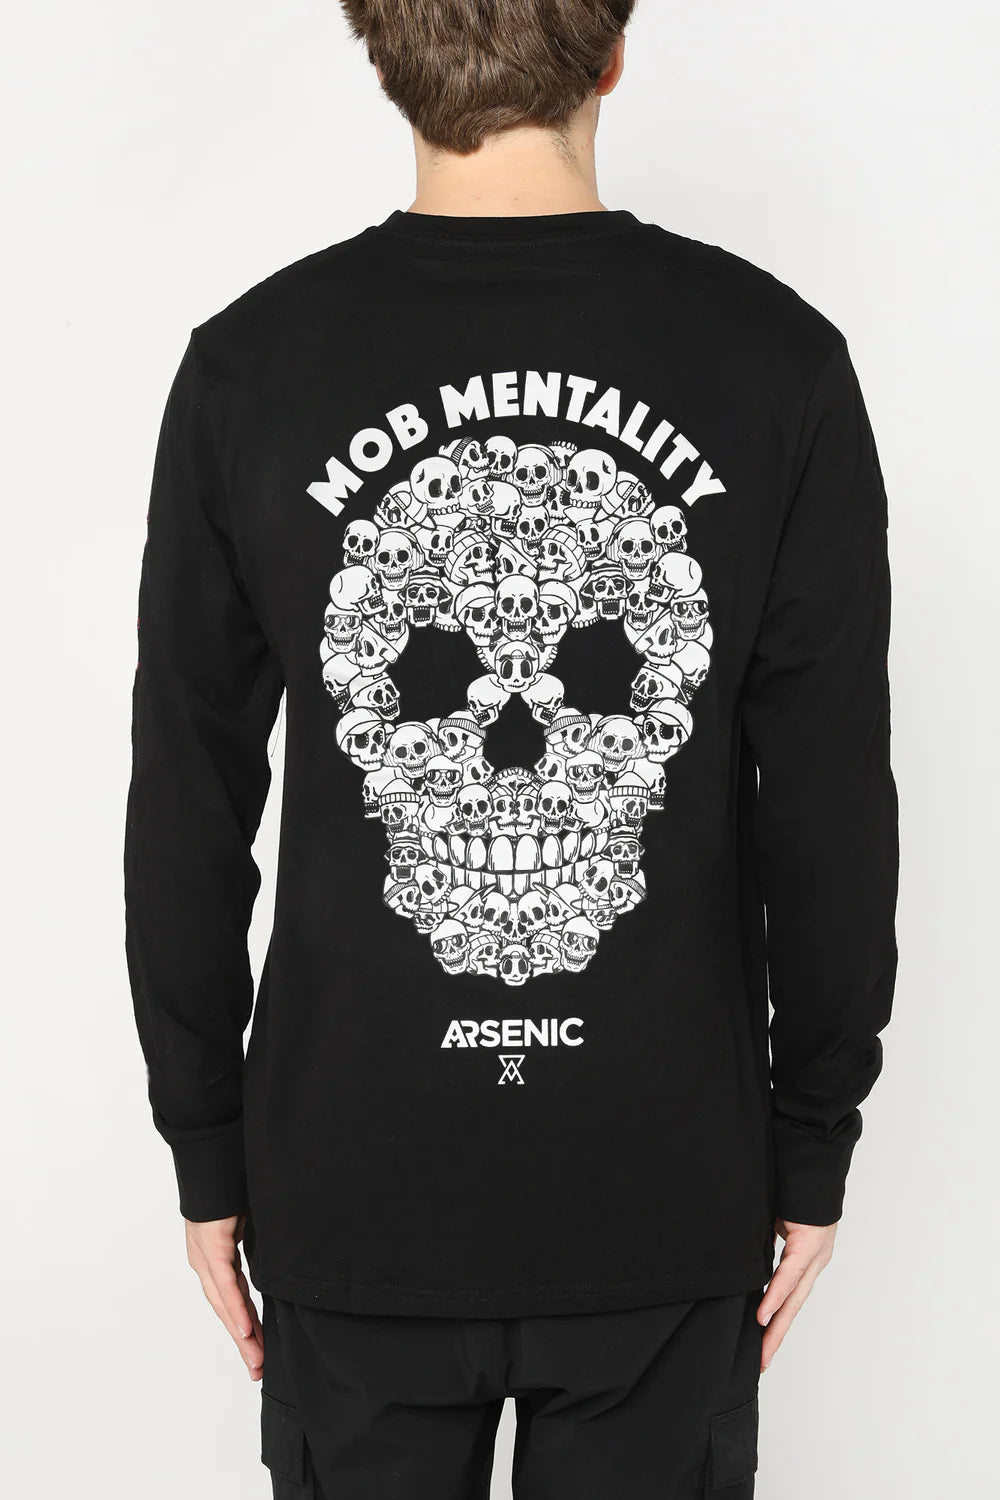 Arsenic mob mentality print long sleeve t-shirt